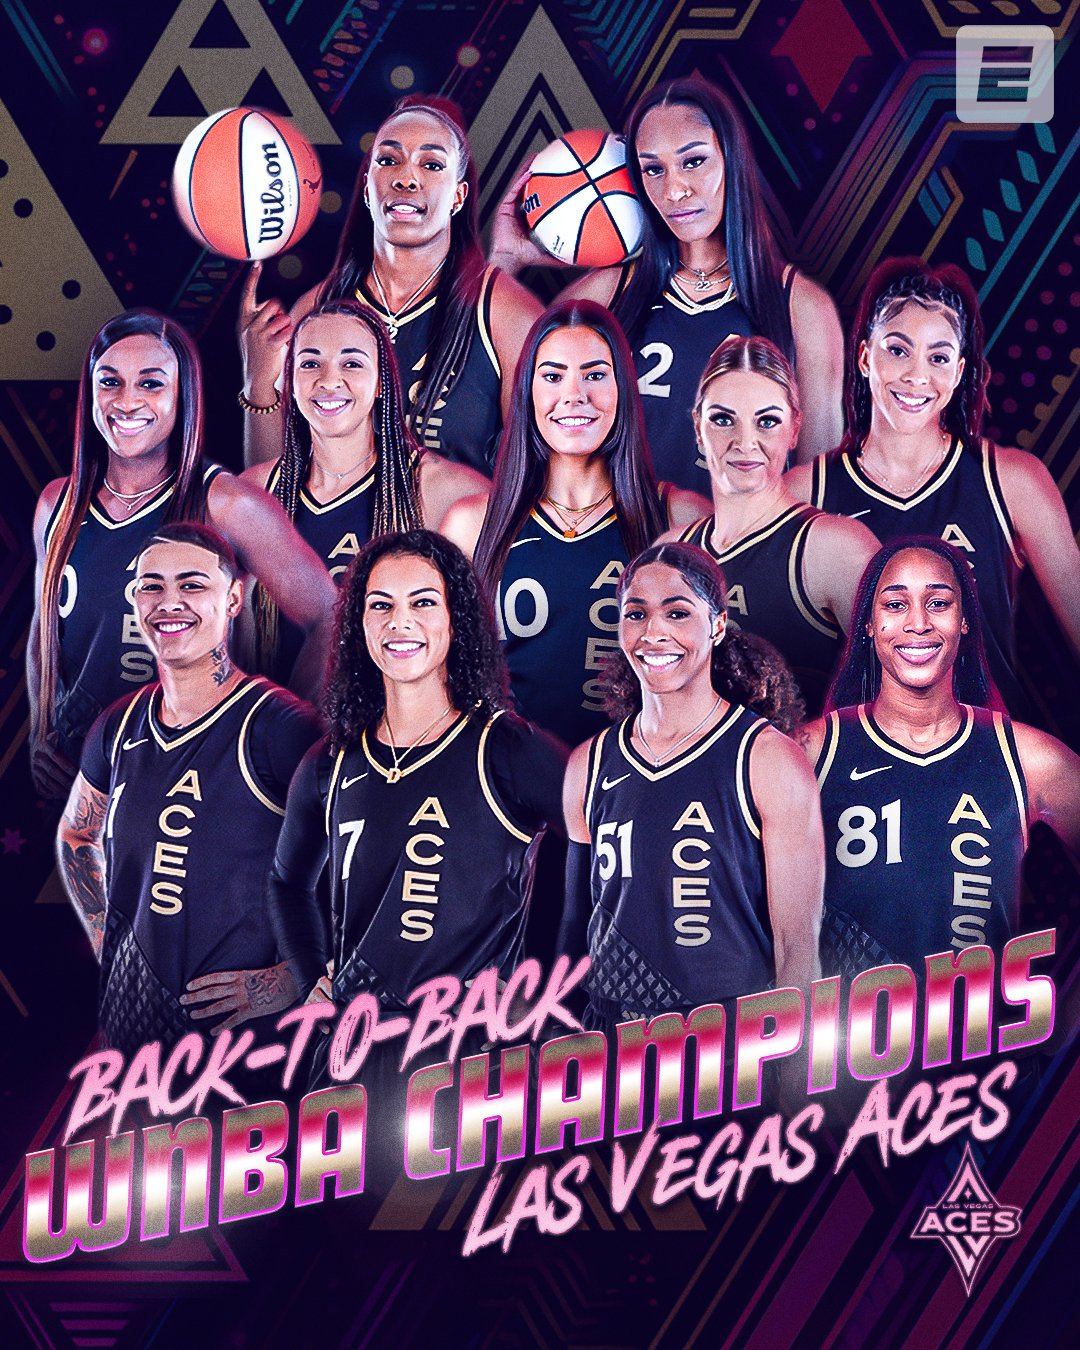 Las Vegas Aces Women's National Basketball Association Champions